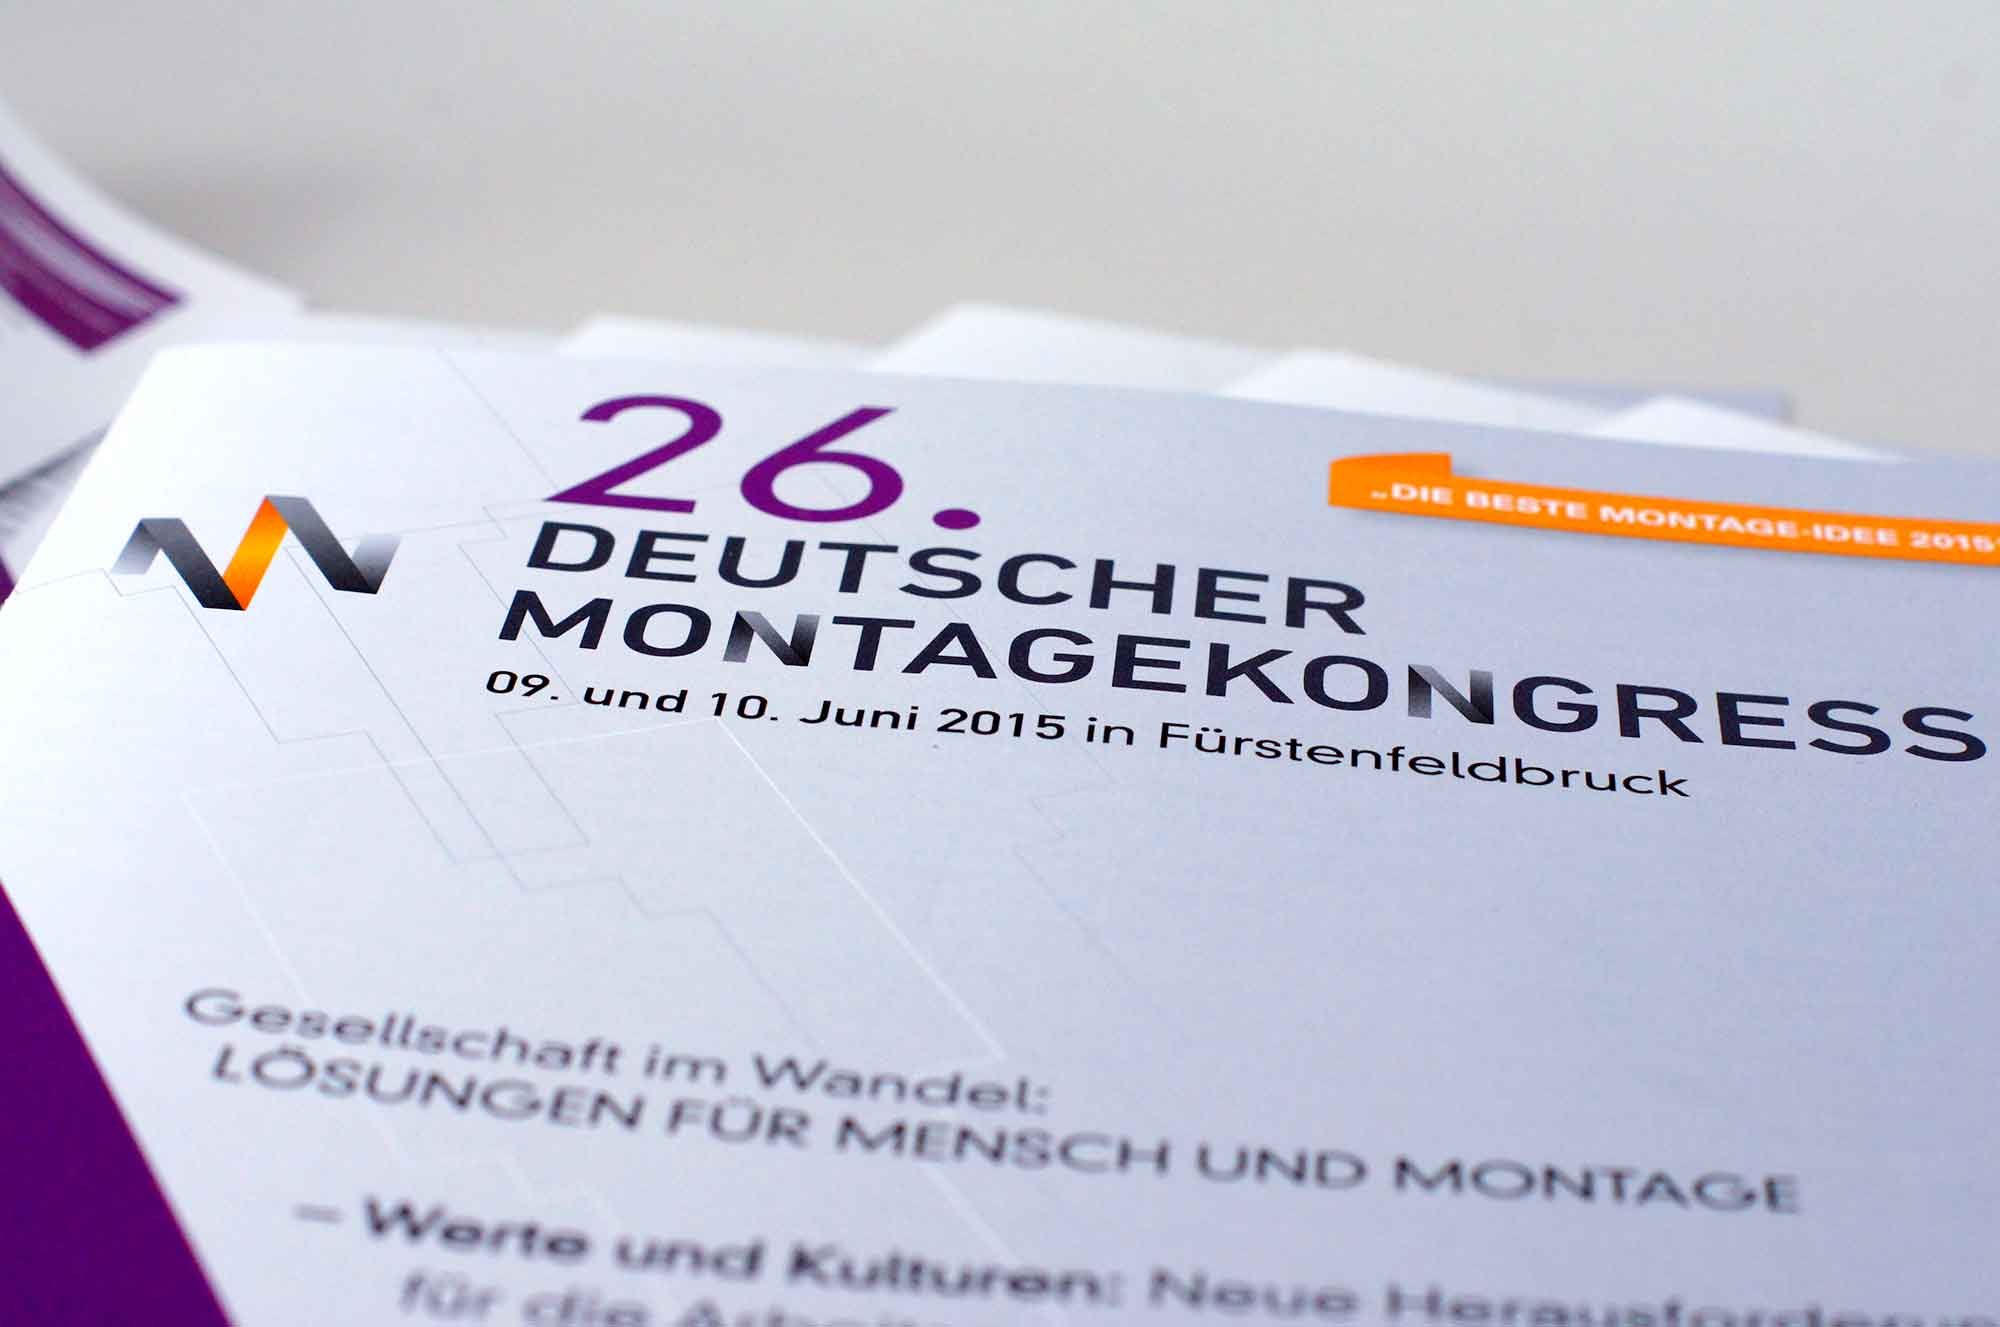 bergstromdesign.de_montage02